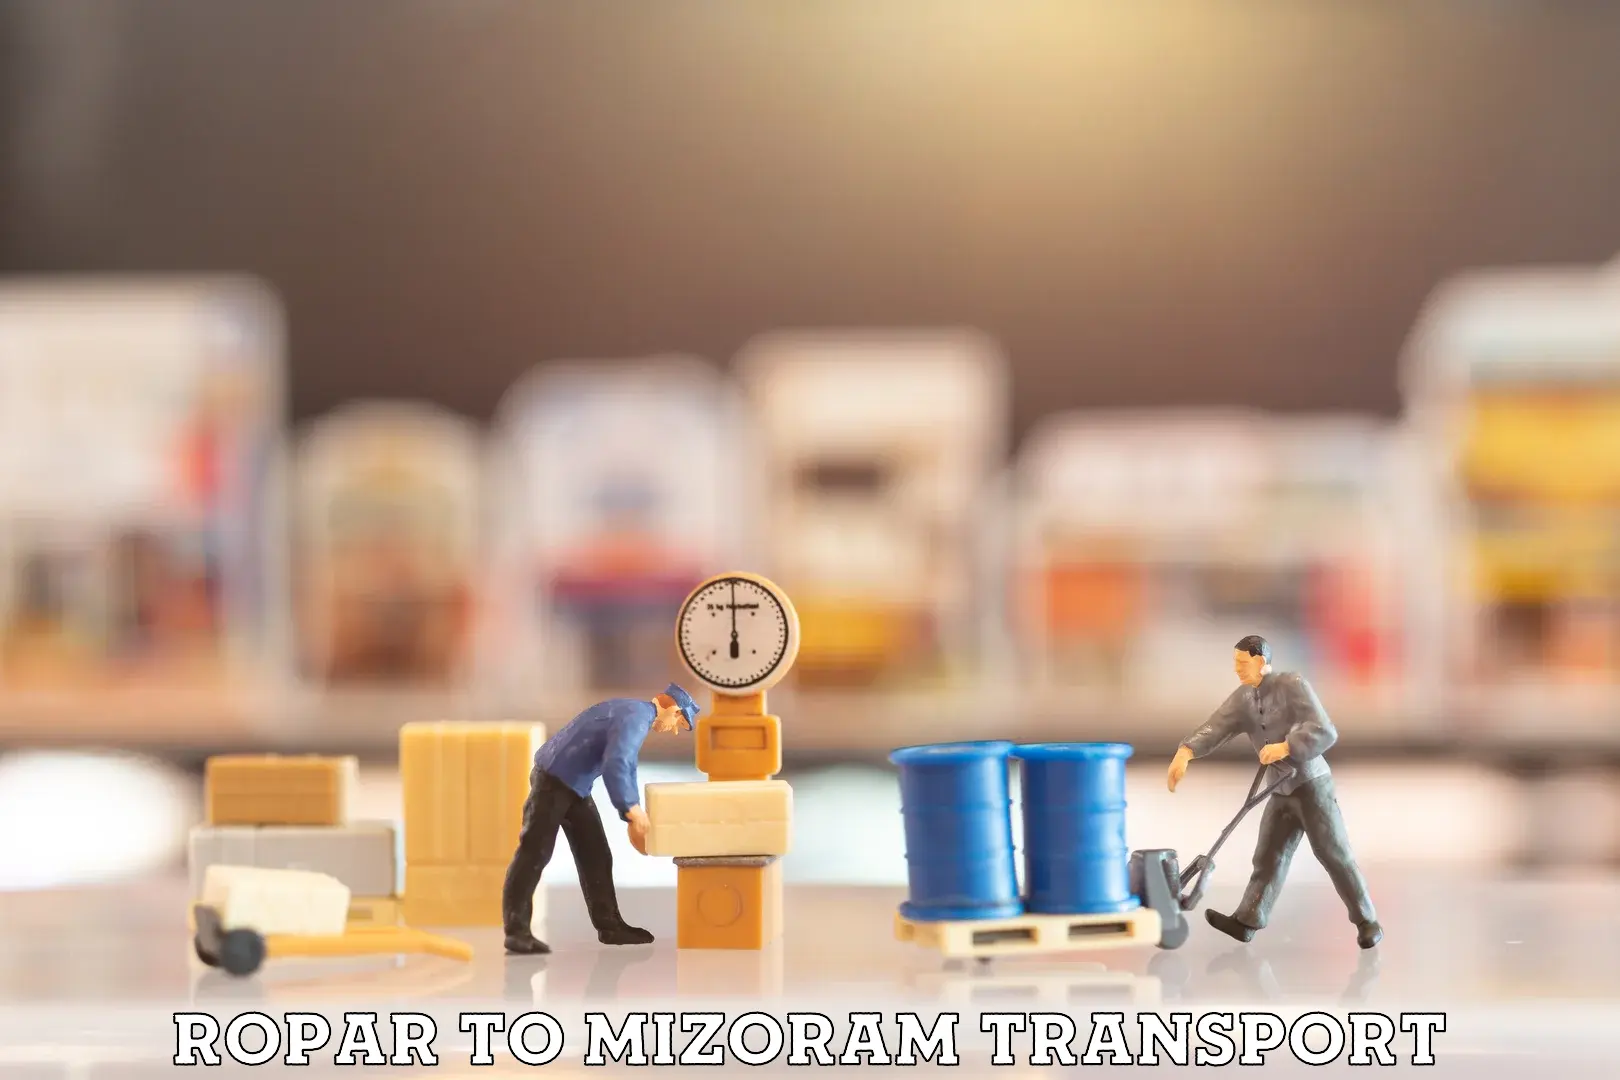 Daily transport service Ropar to Mizoram